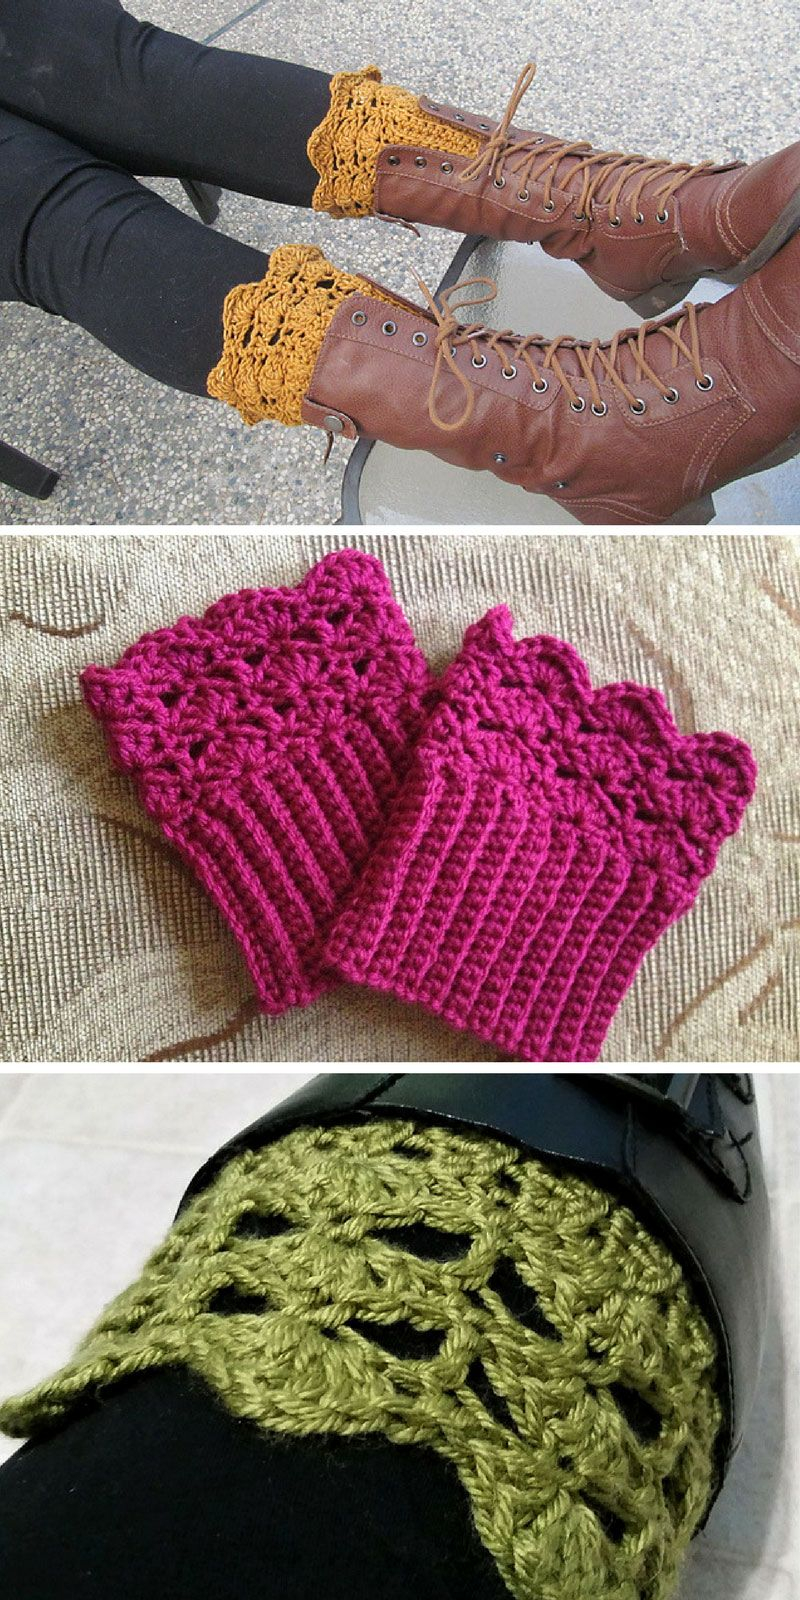 Free Boot Cuff Crochet Patterns 11 Stylish Boot Cuff Crochet Patterns To Add Some Feminine Flair To